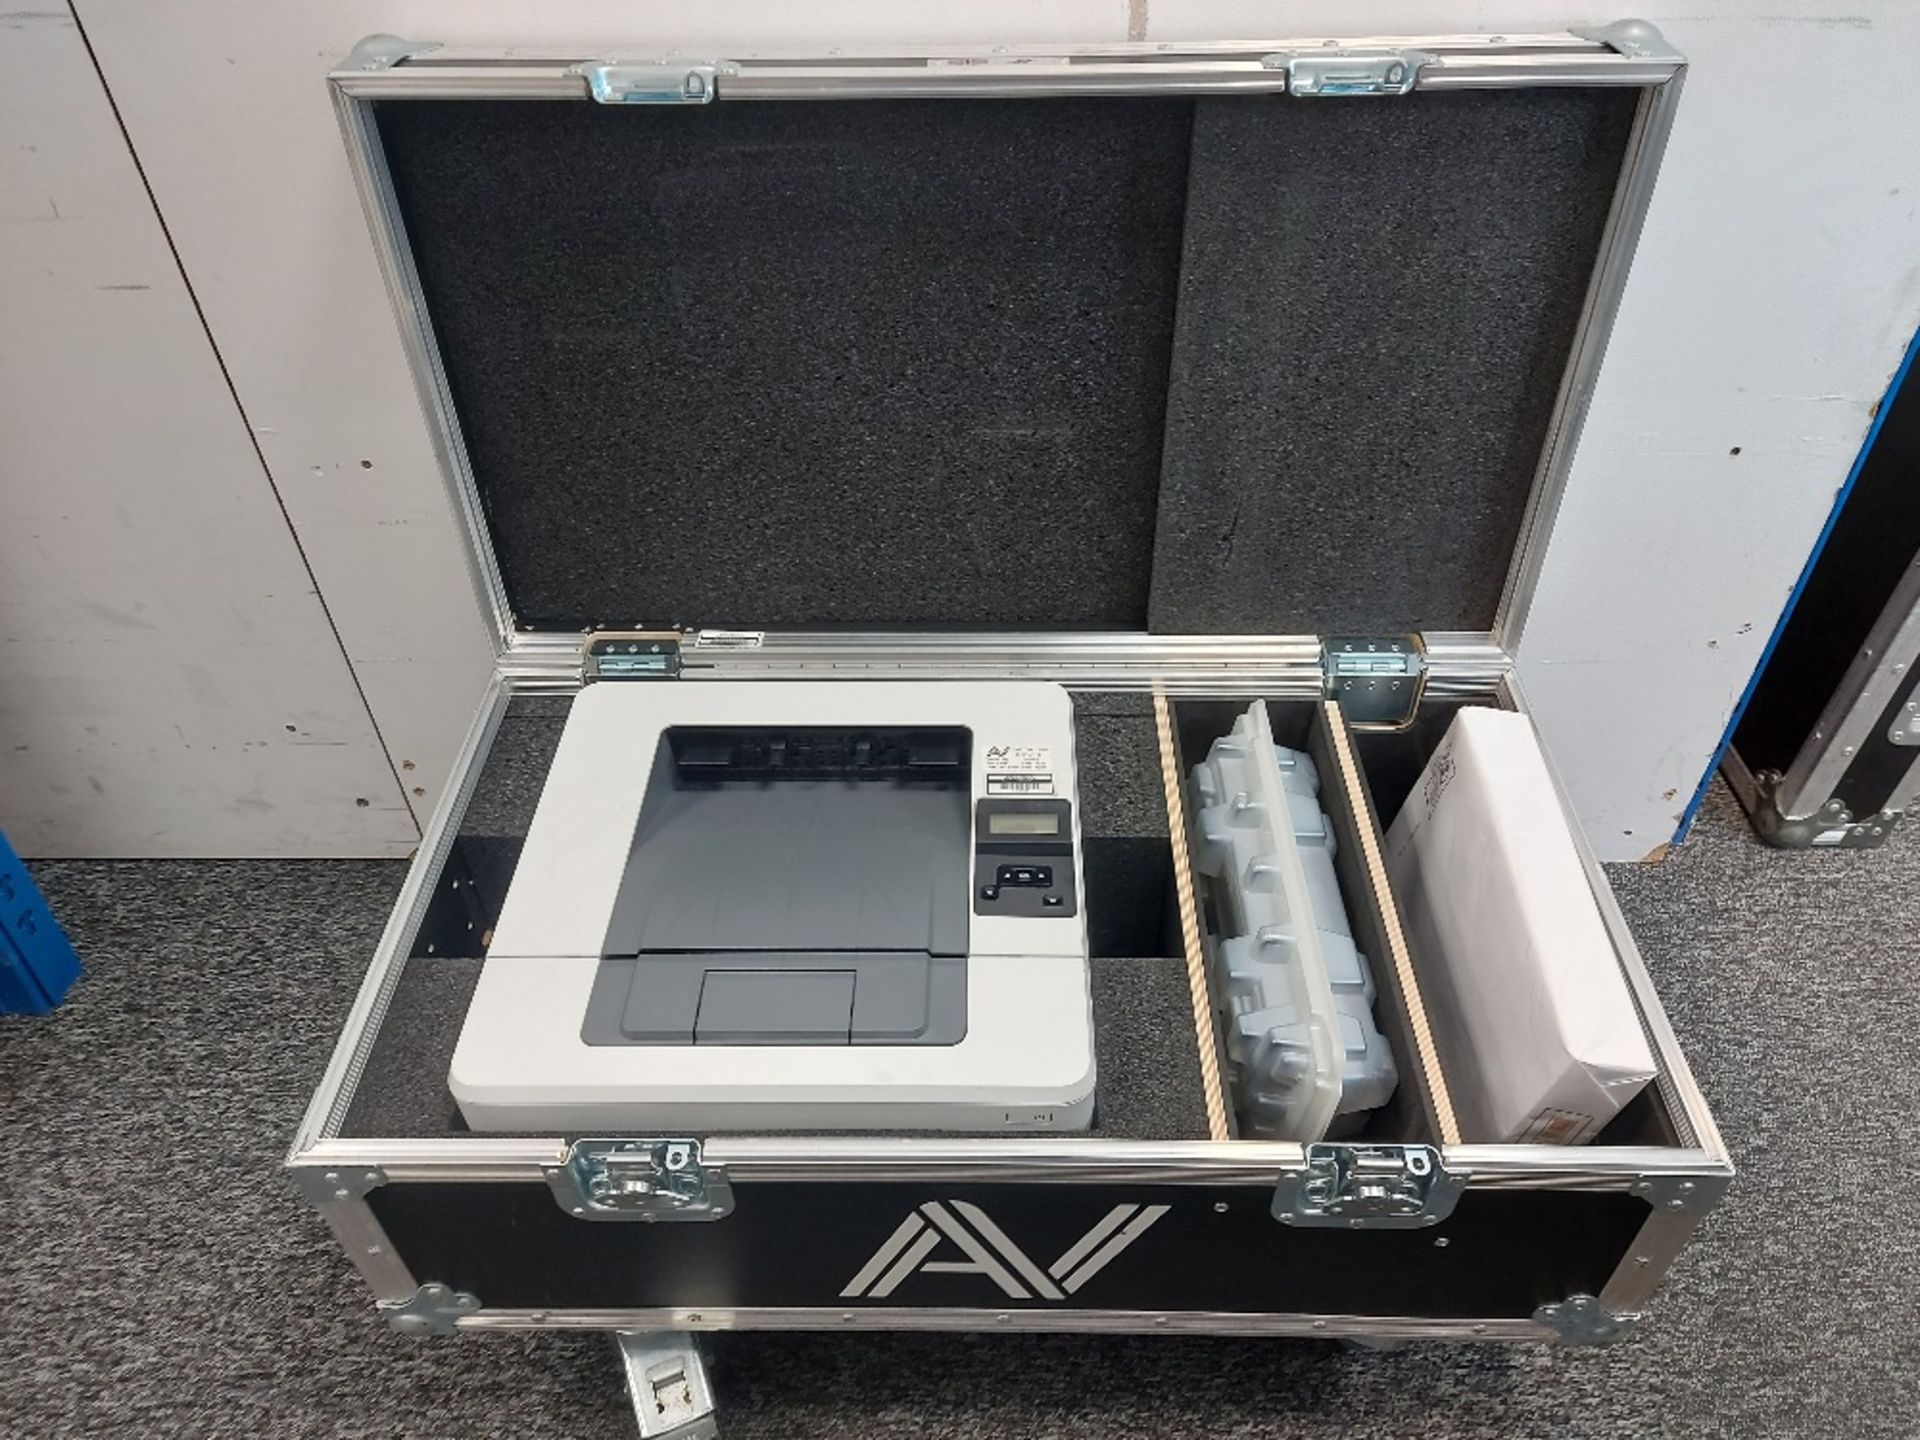 Hewlett M402 LaserJet Mono Printer with Flight Case